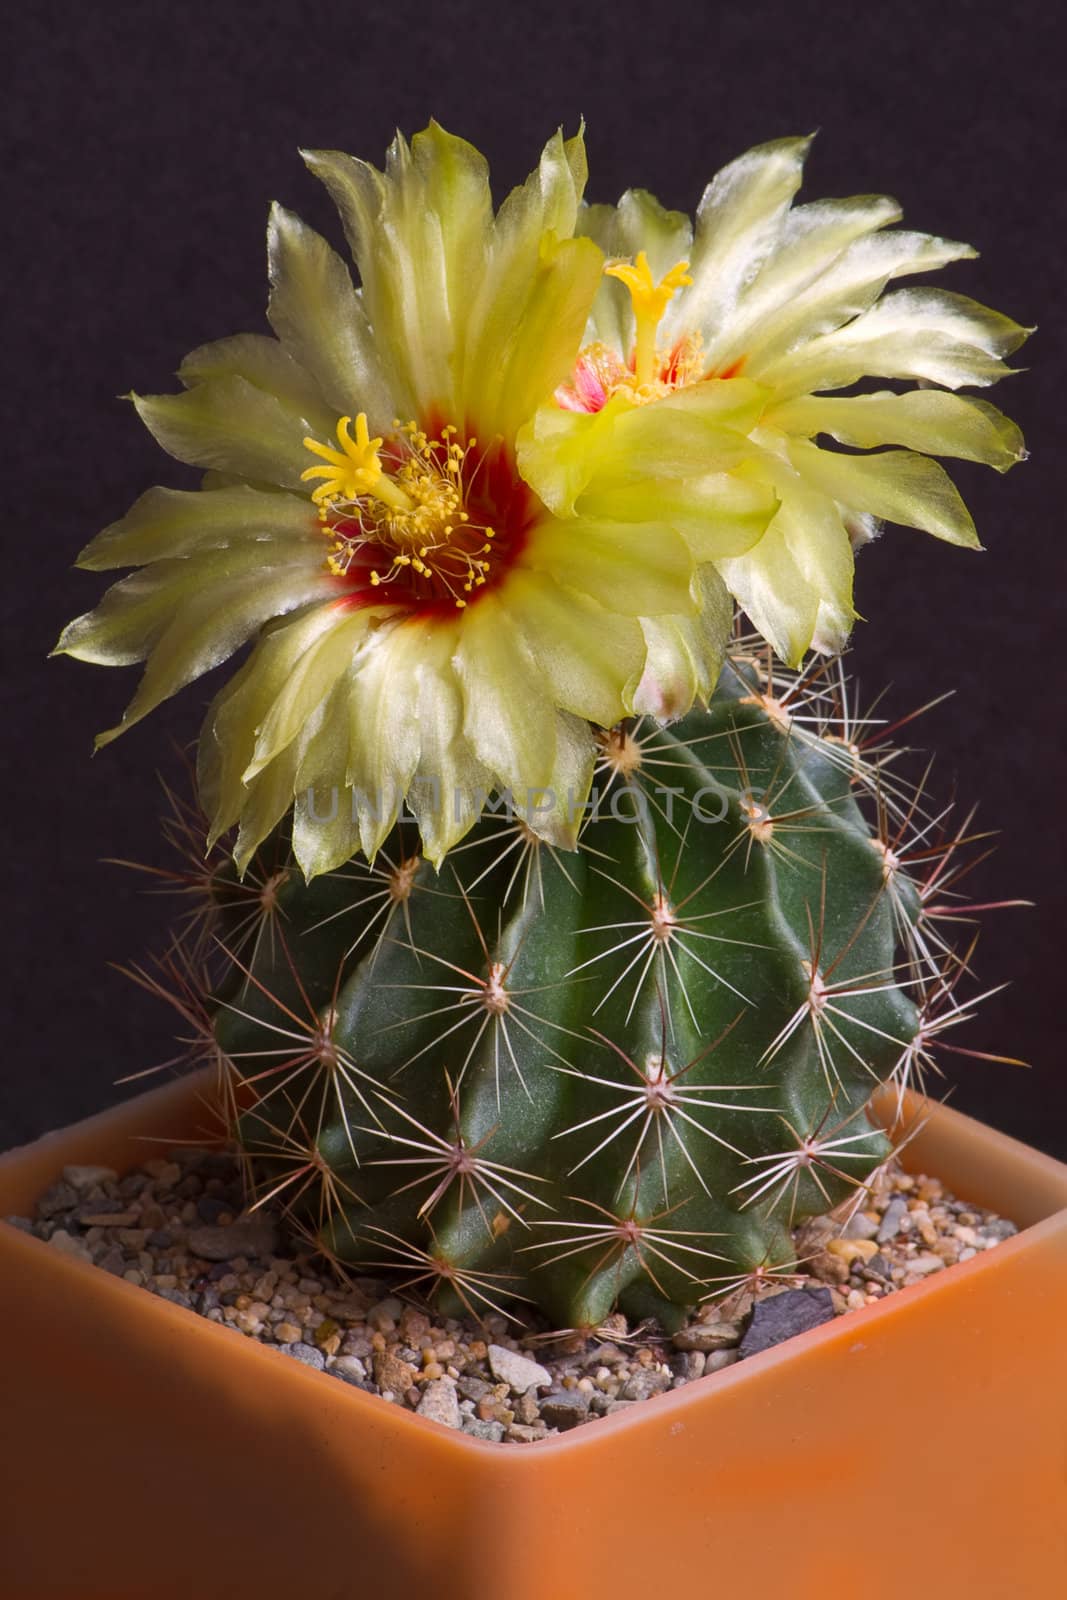 Cactus with  flowers  on  dark background (Notocactus).